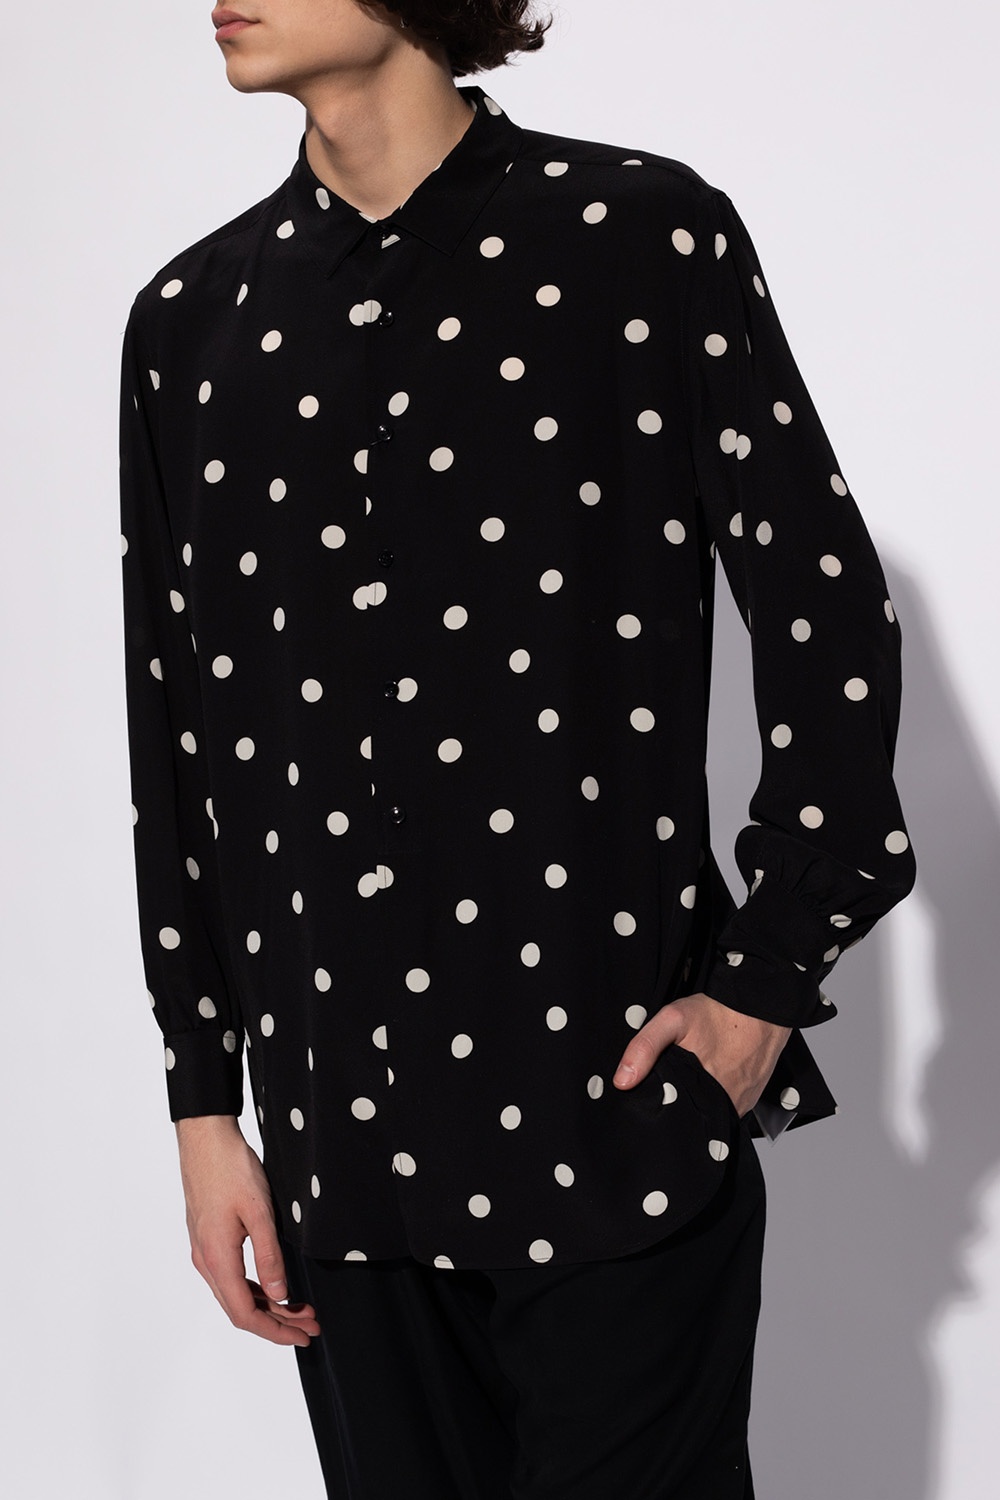 Saint Laurent Polka dot shirt | Men's Clothing | Vitkac